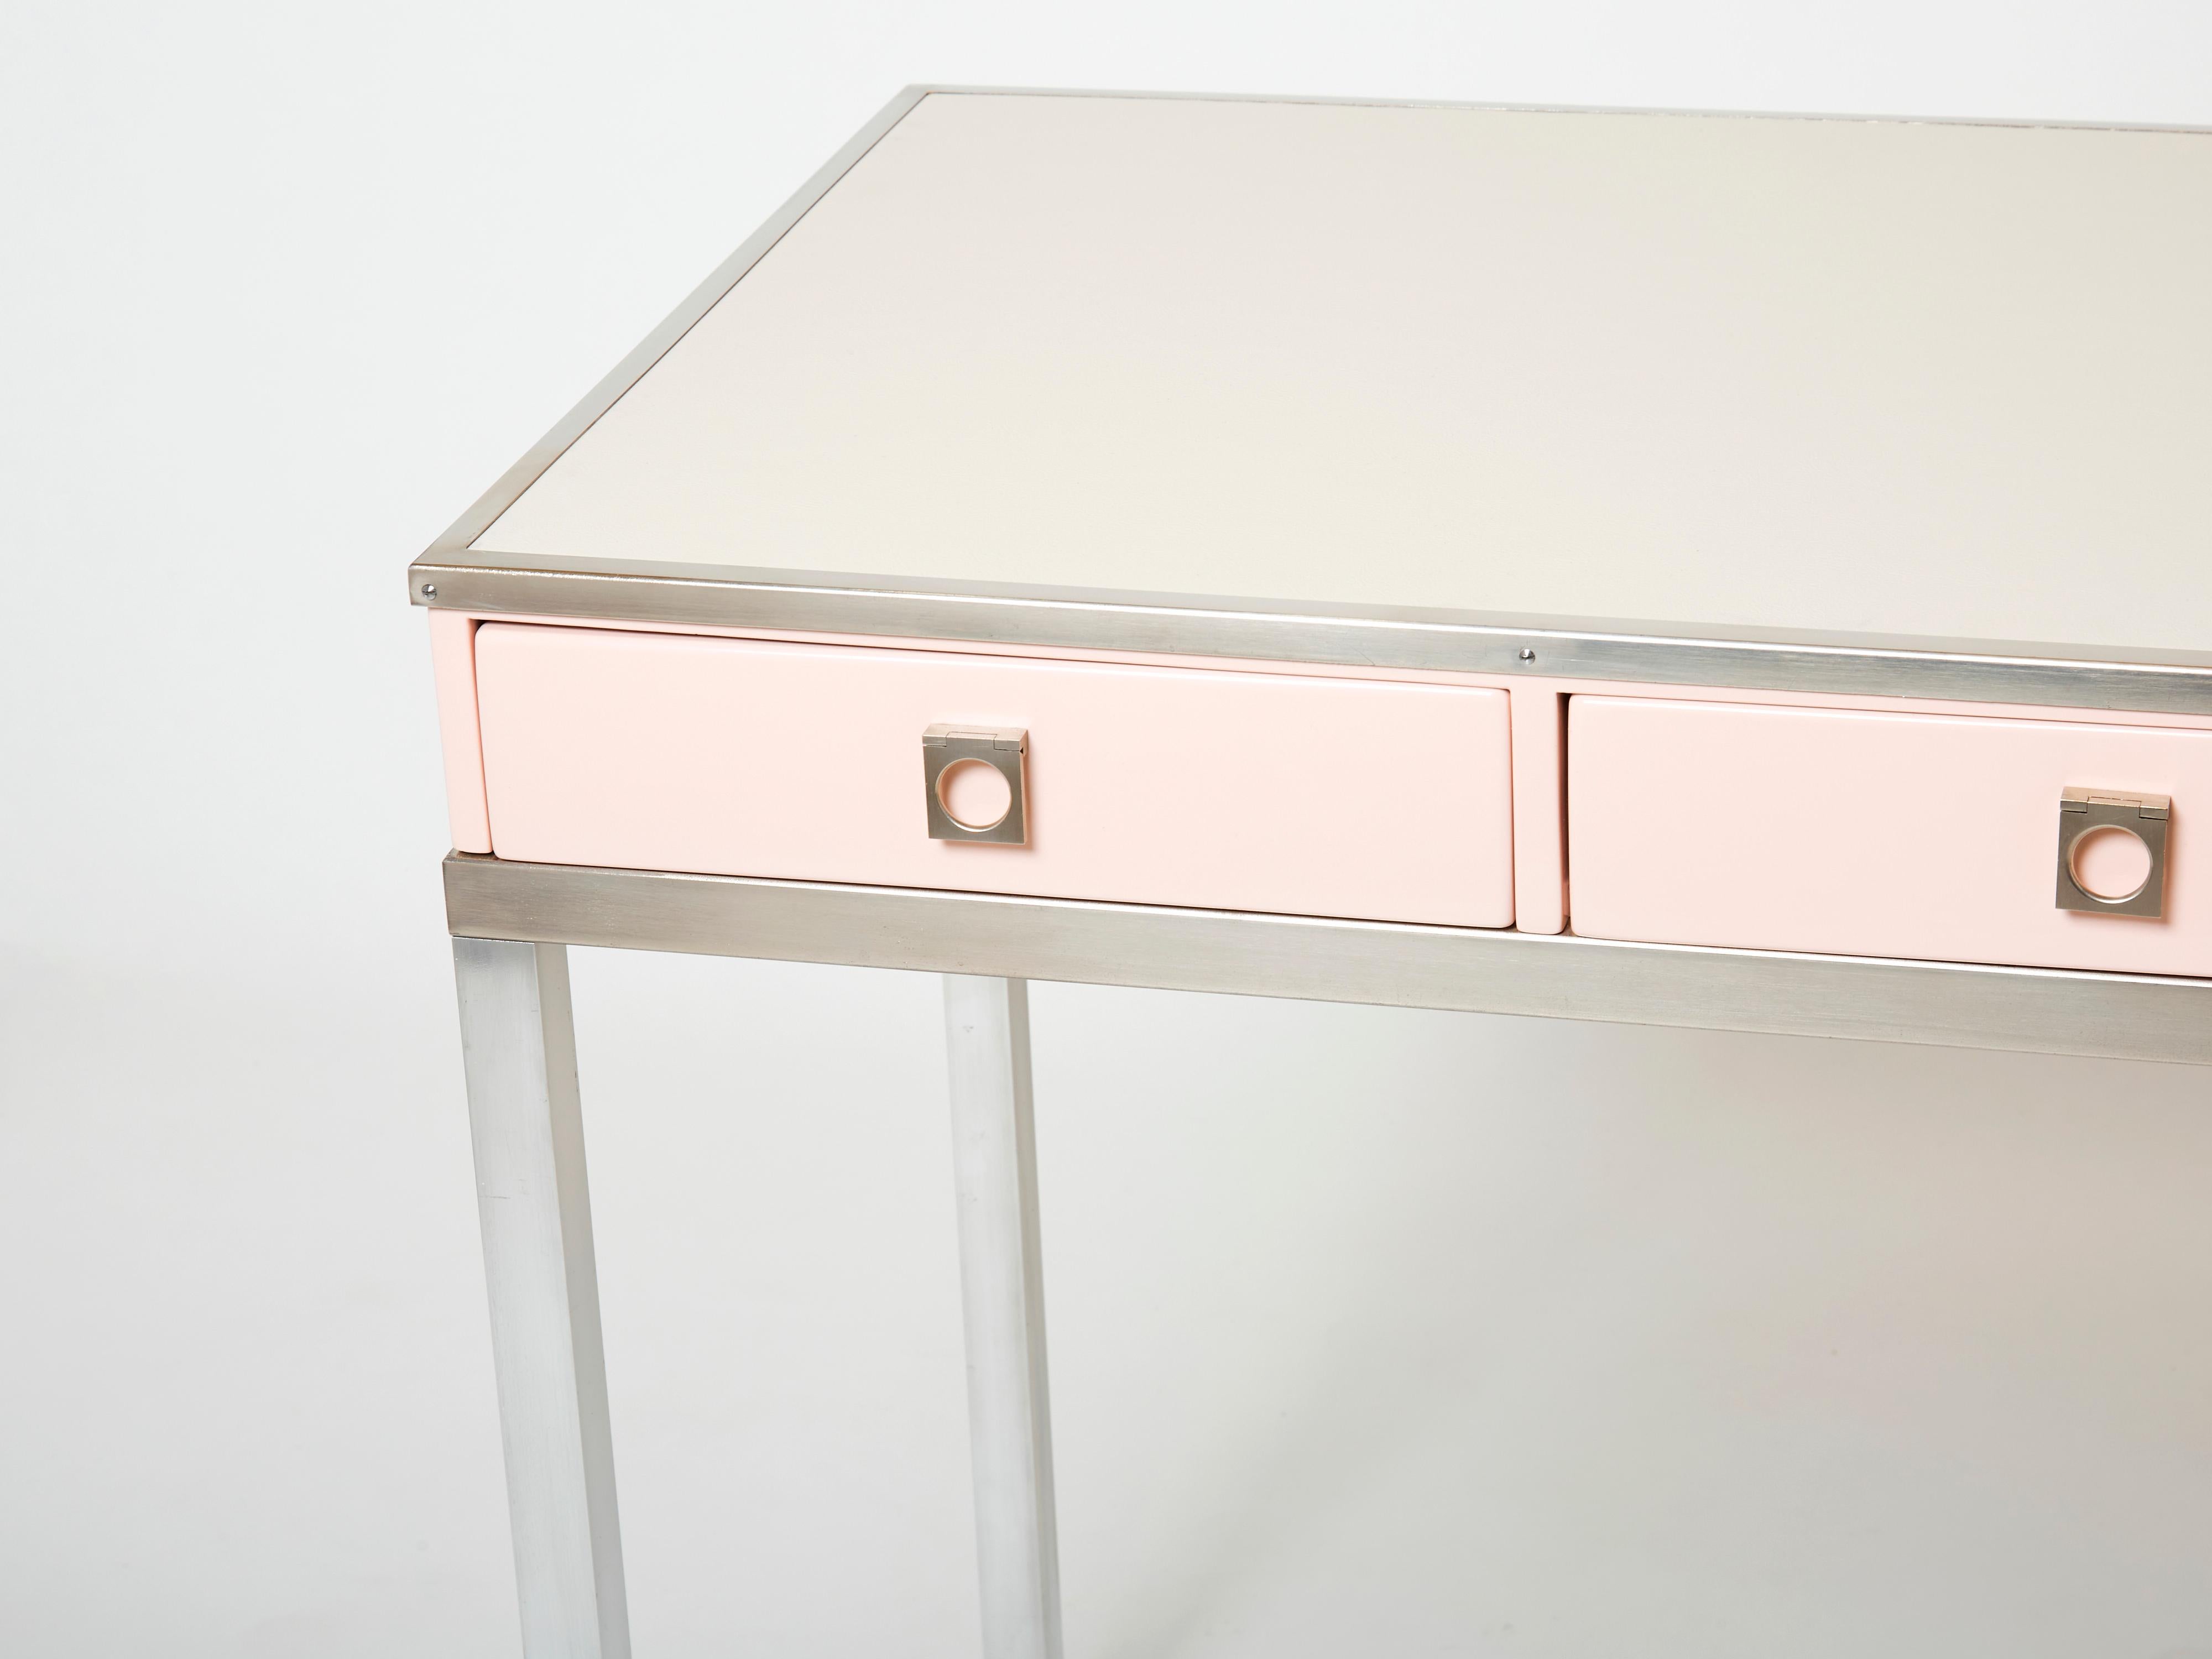 French Desk table Guy Lefevre Maison Jansen rose lacquer steel leather top 1970s